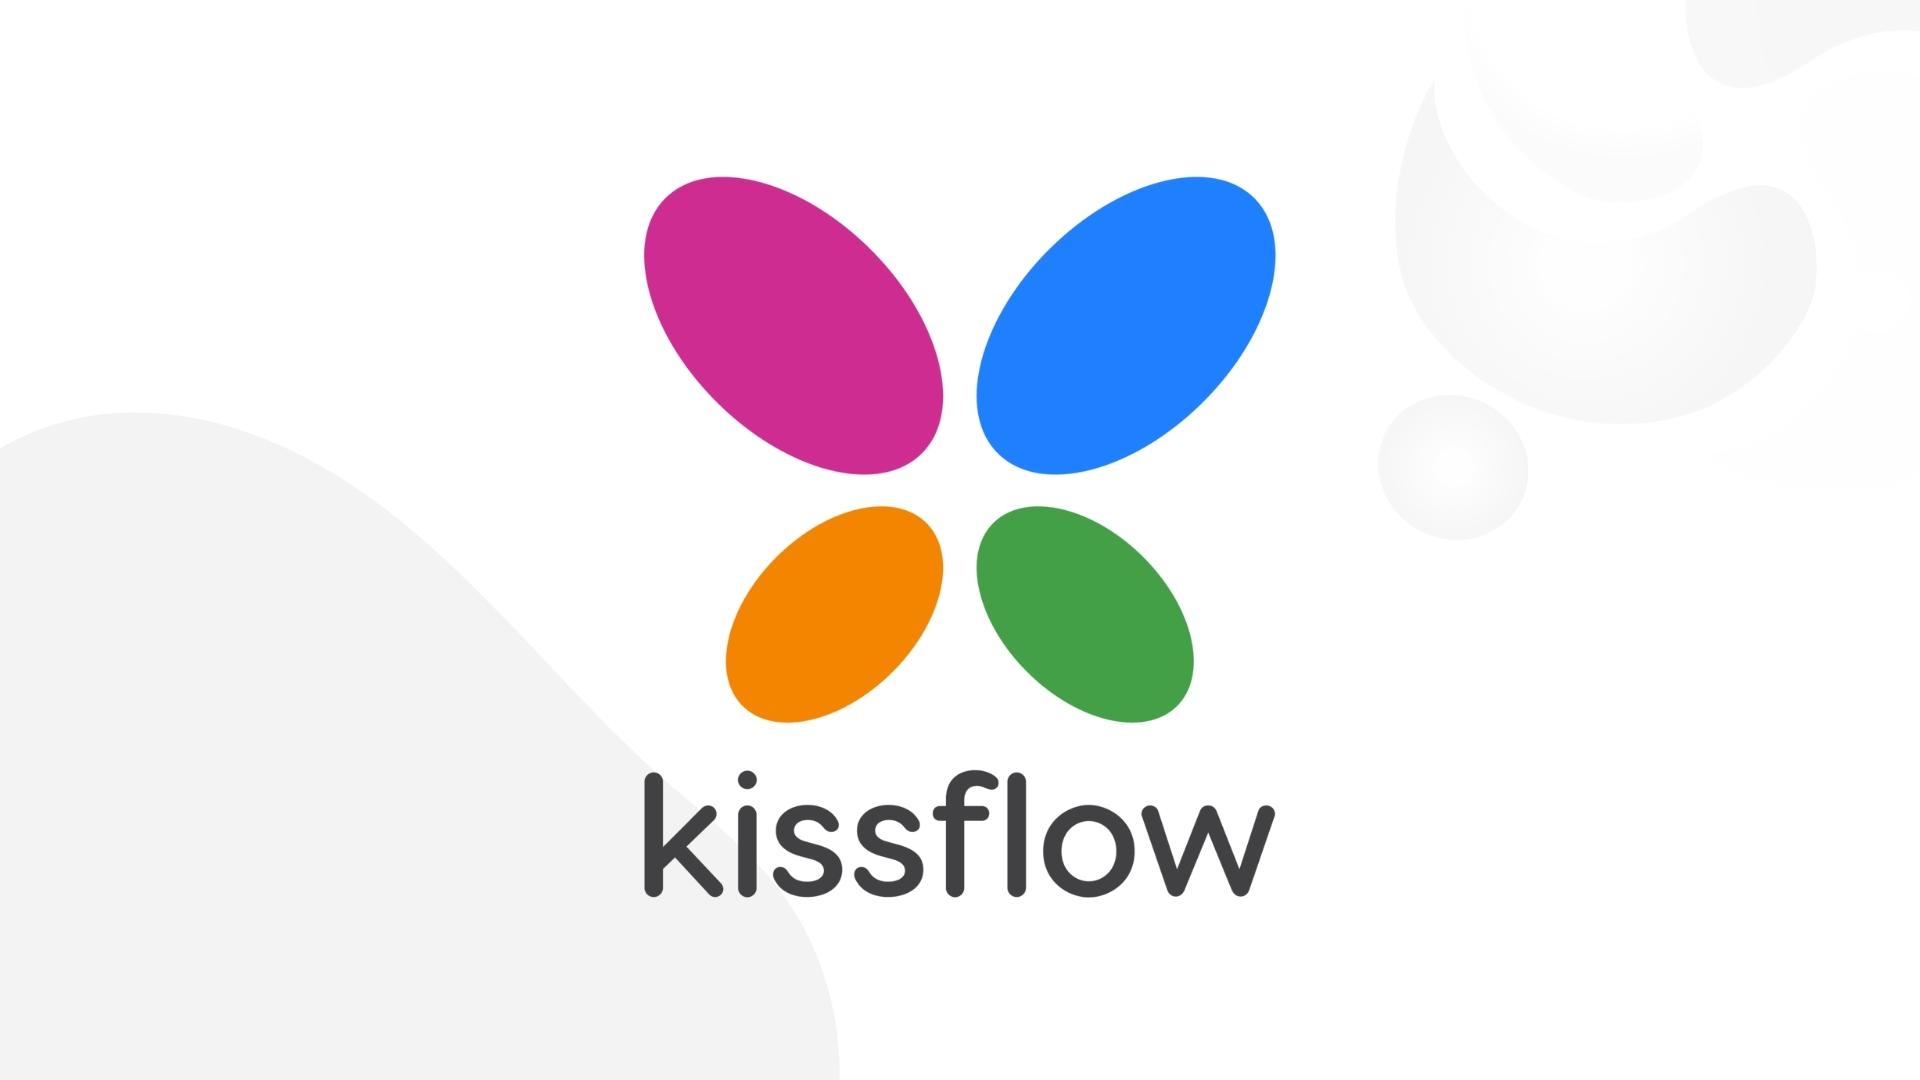 empresa-kissflow-lanca-plataforma-low-code-no-code